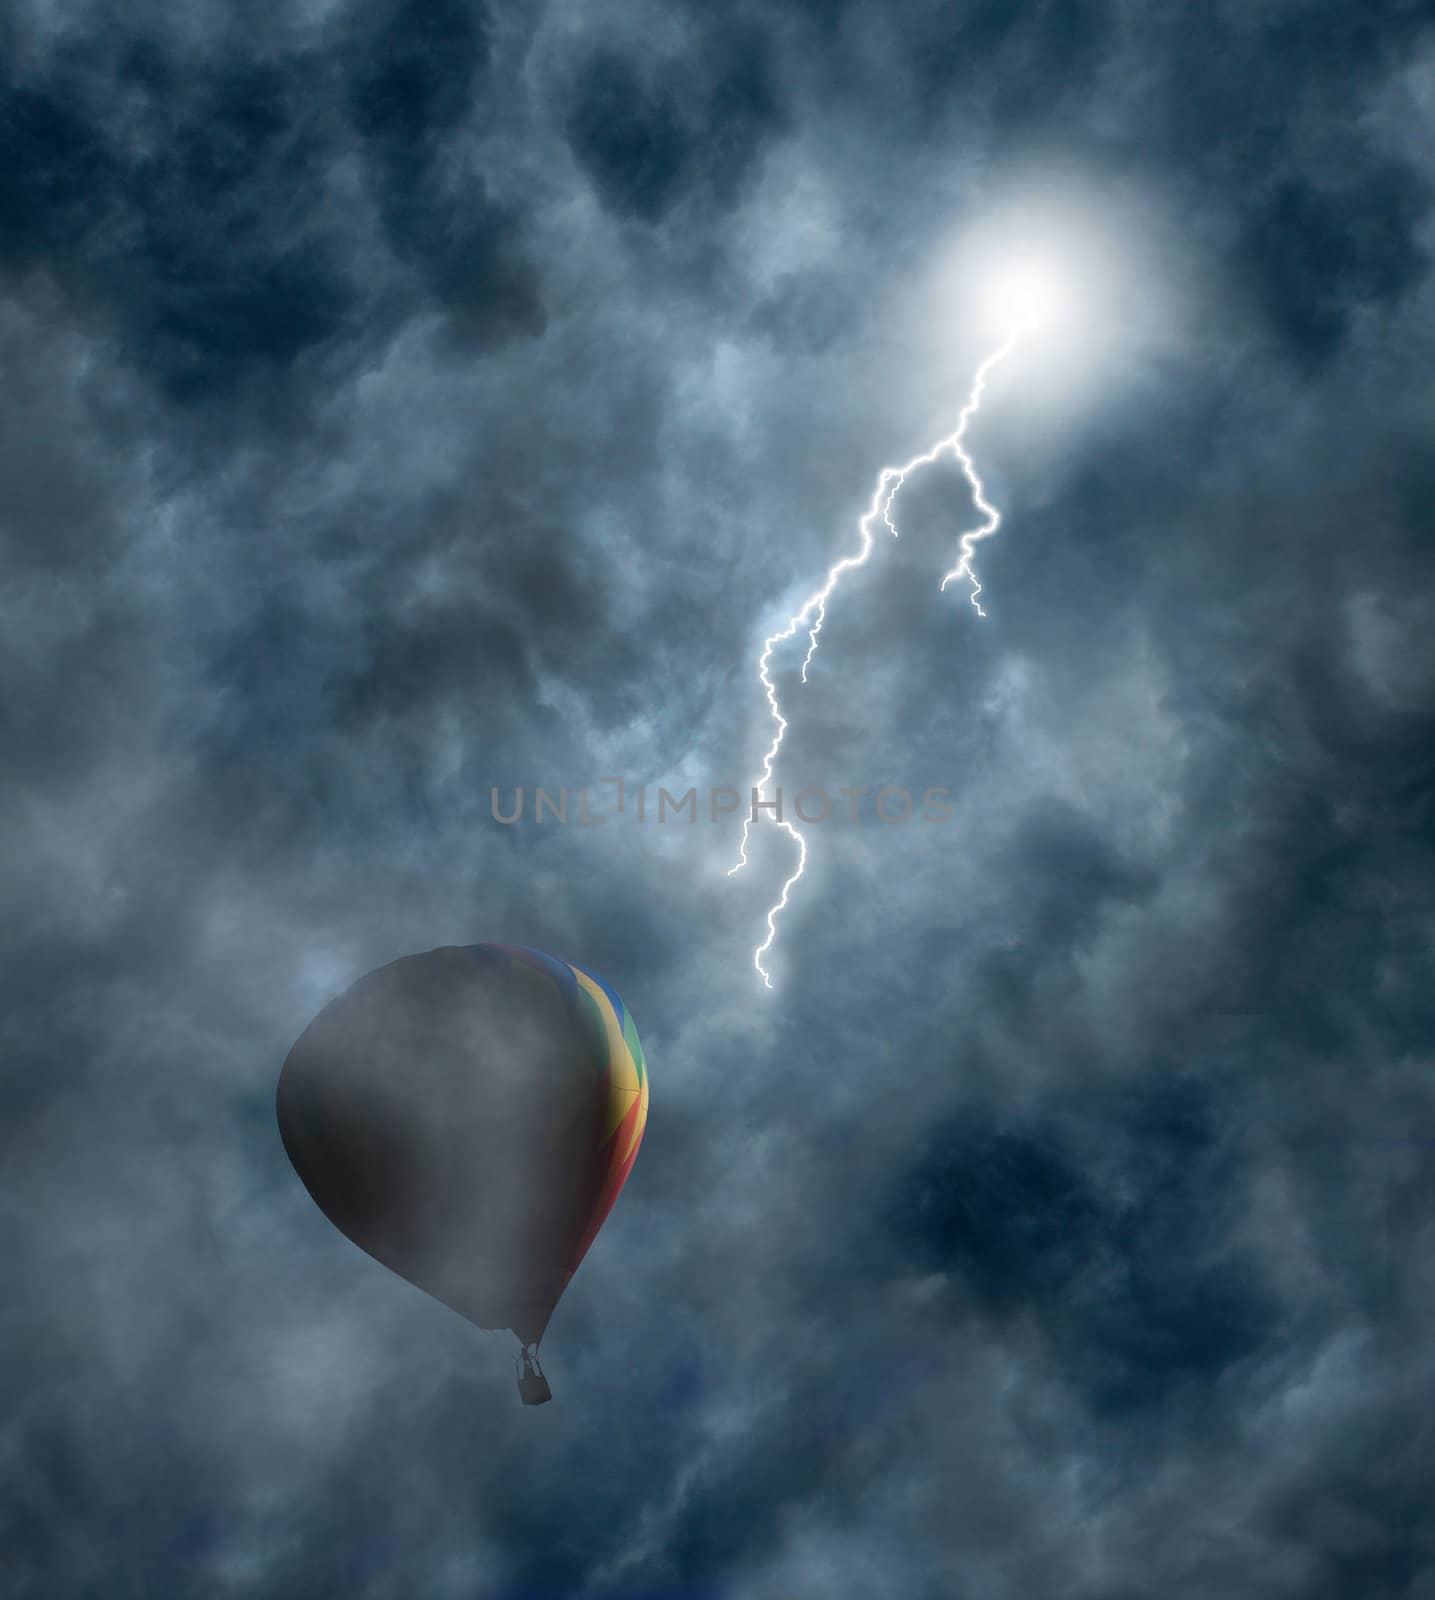 Lightning bolt coming from dark storm clouds toward hot-air balloon